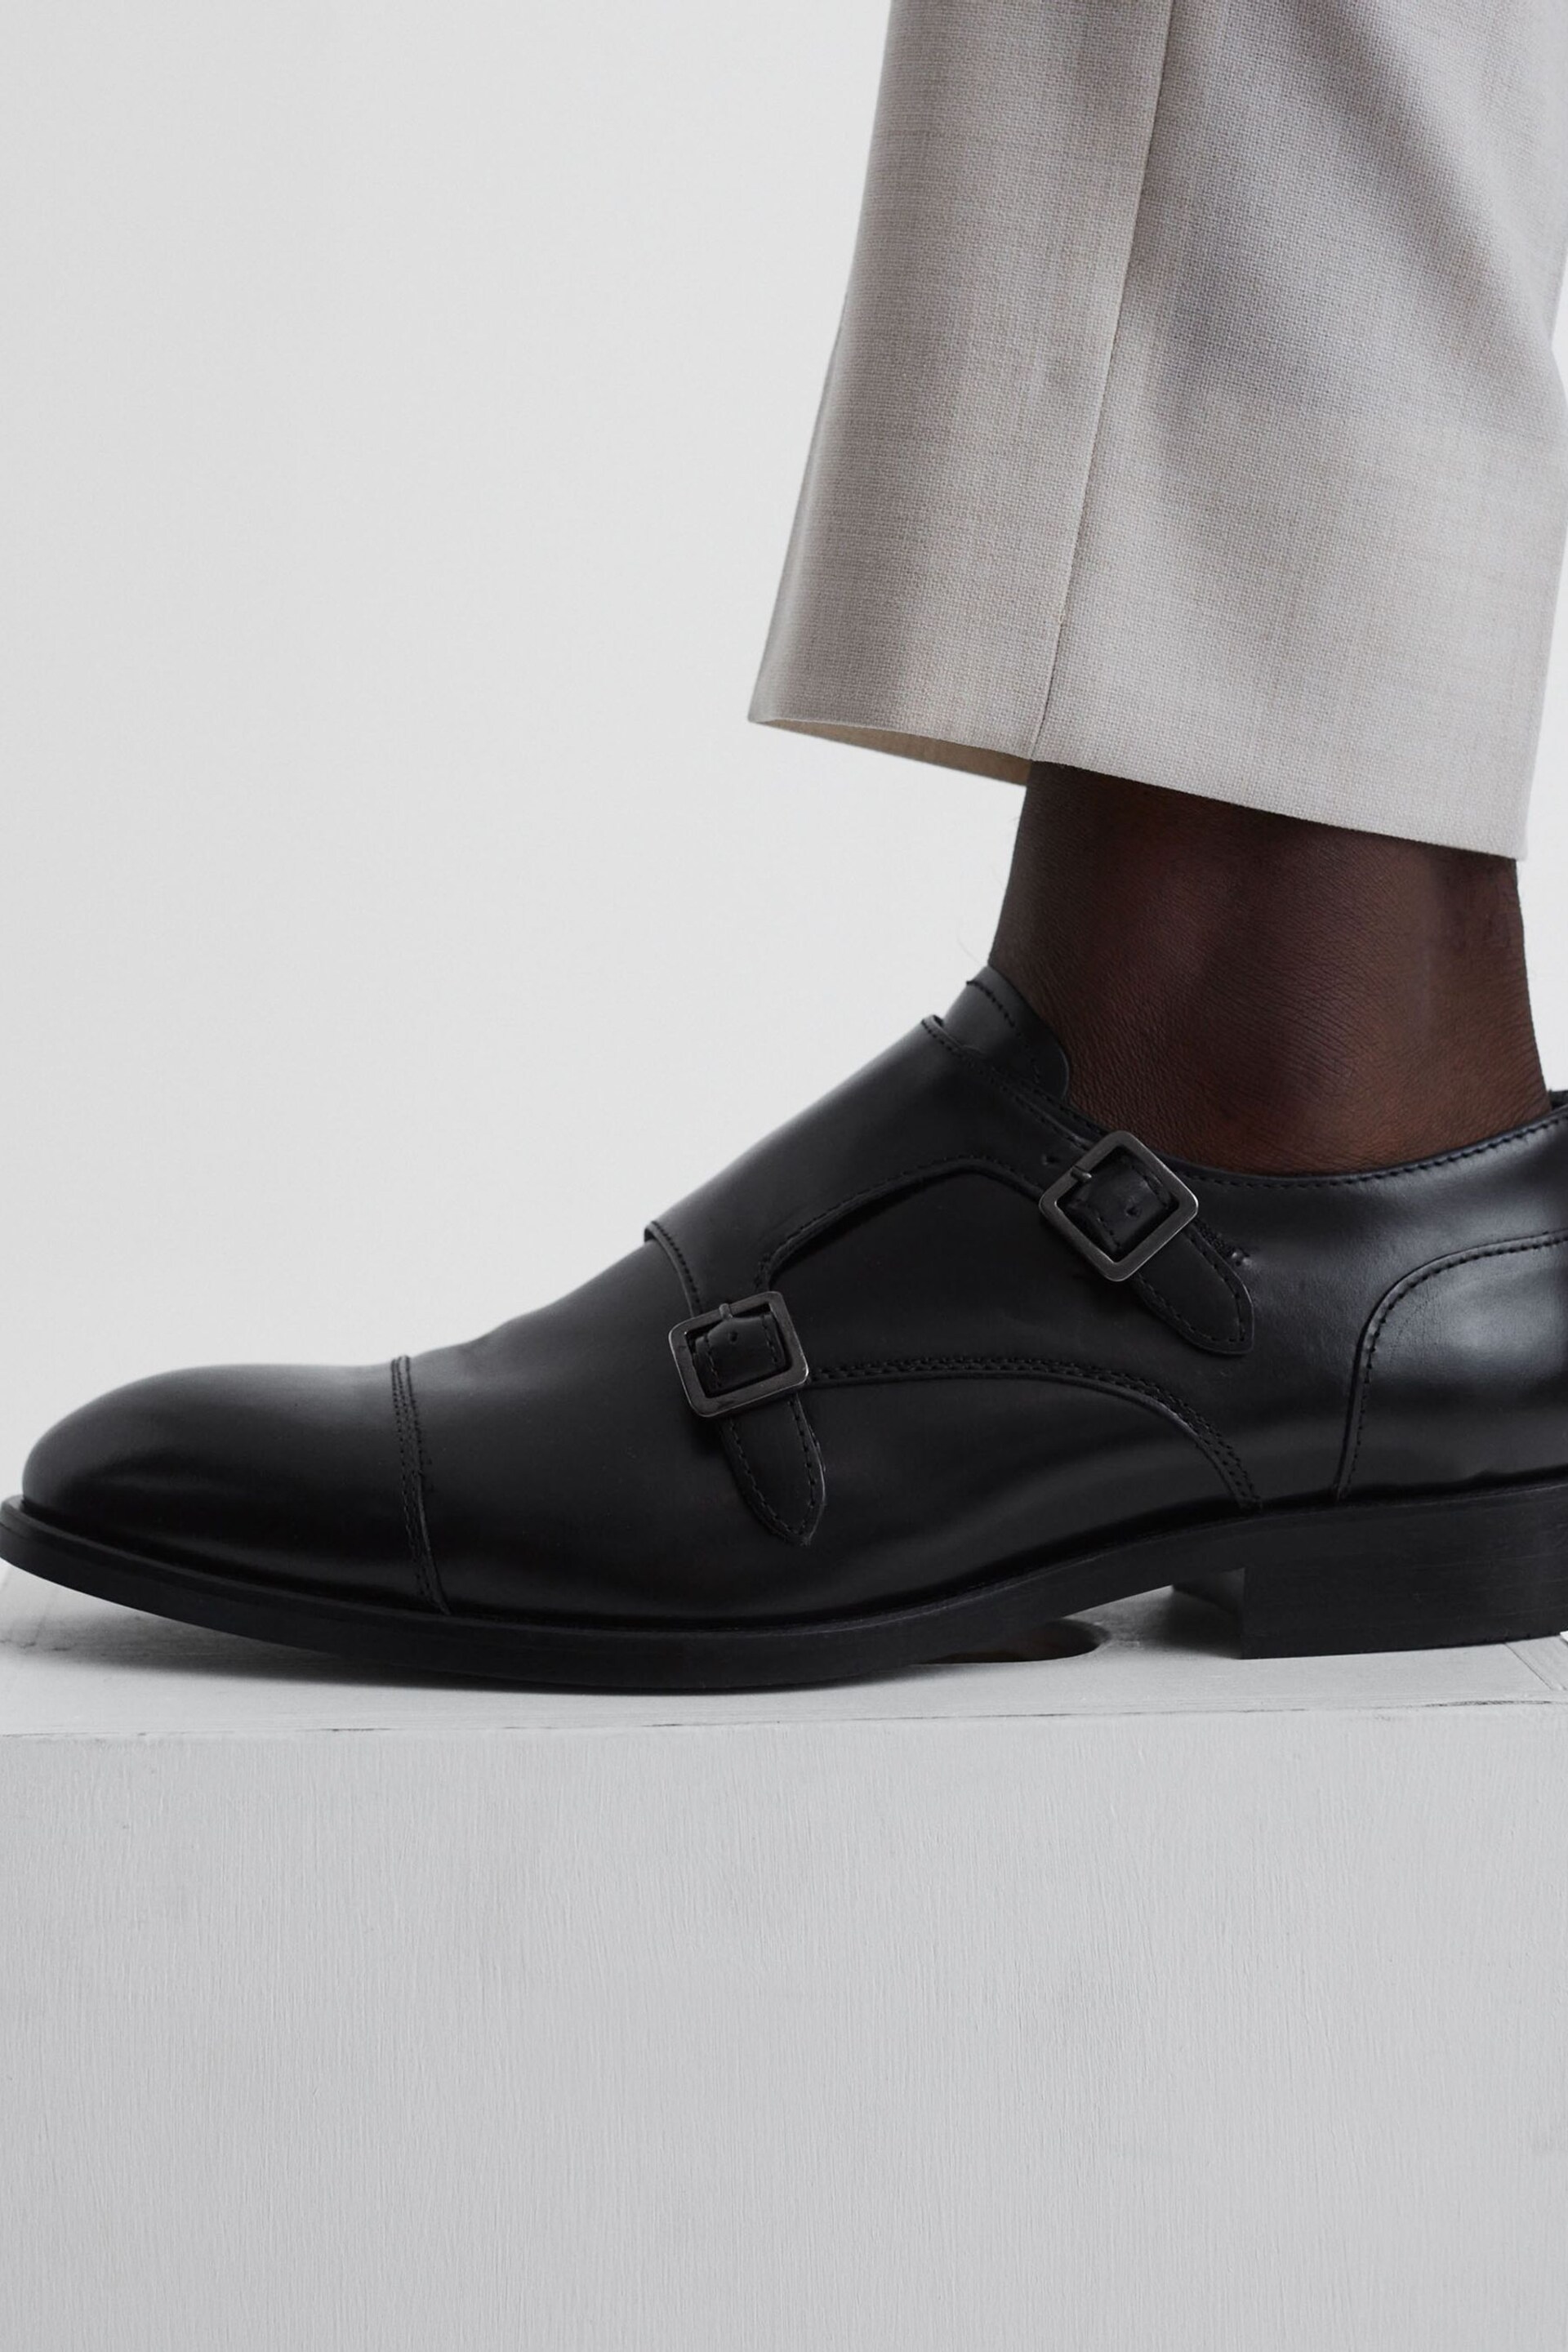 Reiss Black/Gunmetal Rivington Leather Monk Strap Shoes - Image 2 of 6